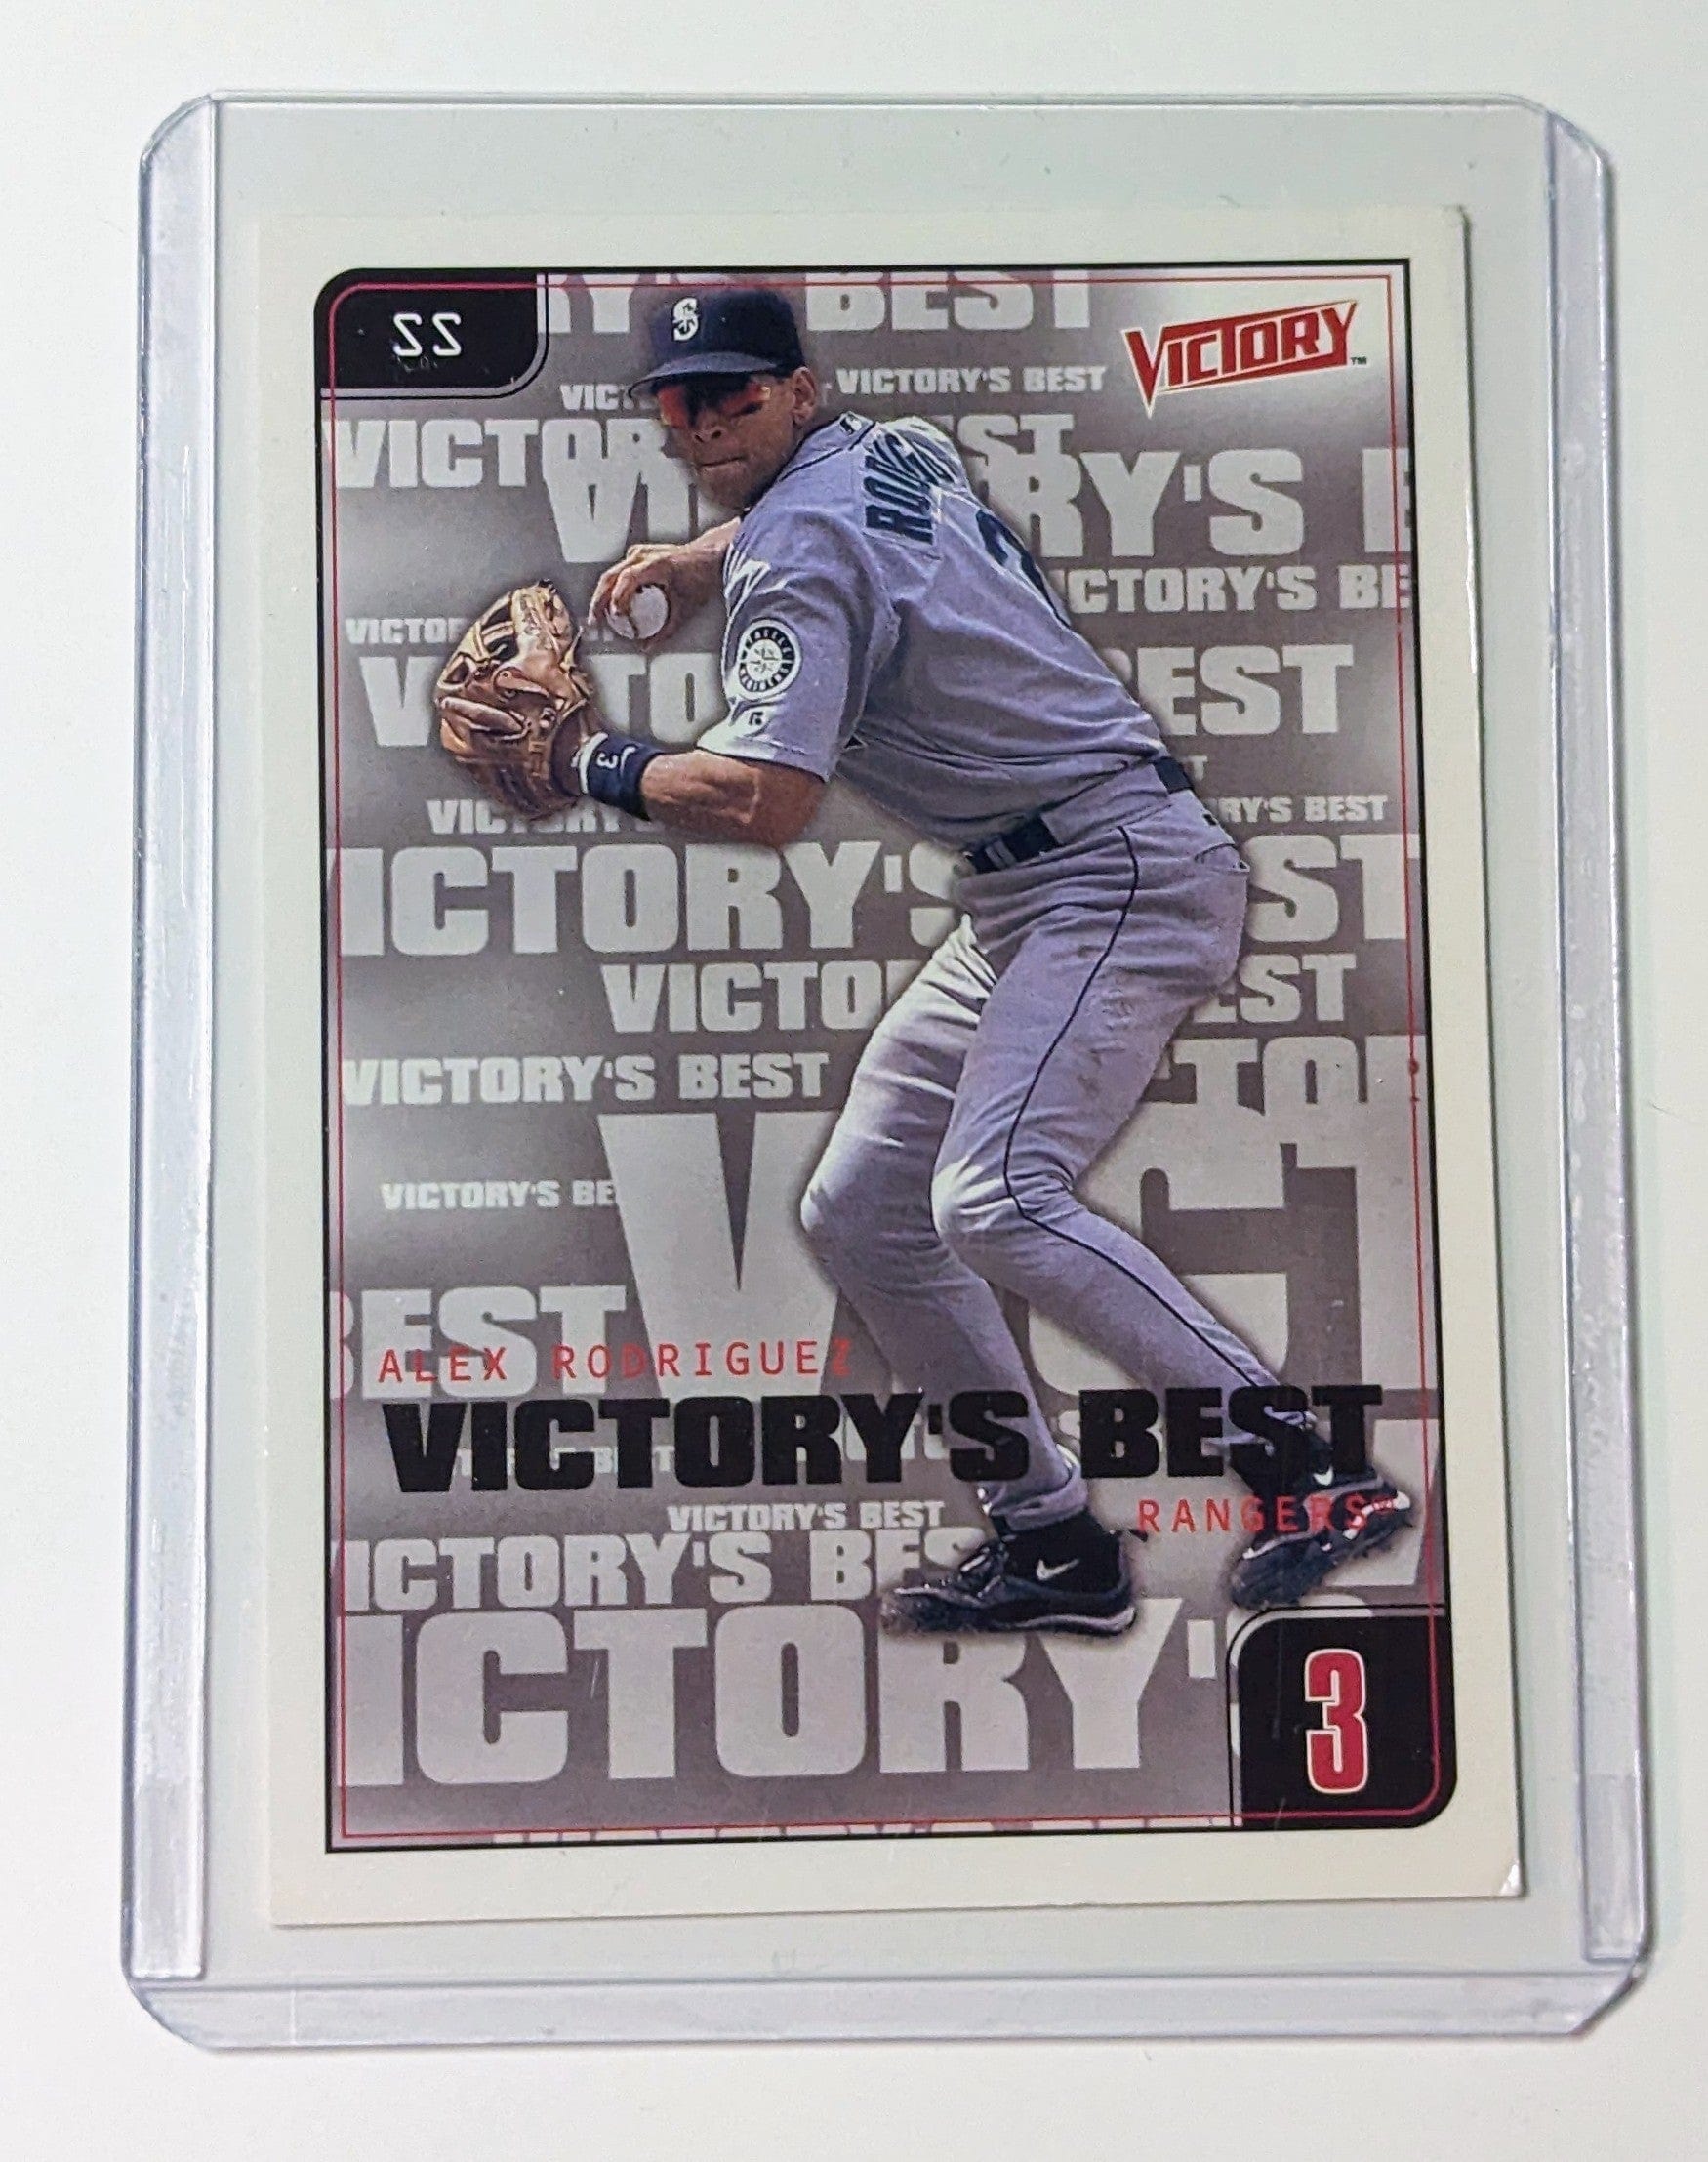 FIINR Baseball Card 2001 Upper Deck Alex Rodriguez / A-Rod MLB Baseball Card #655 - Mint Condition